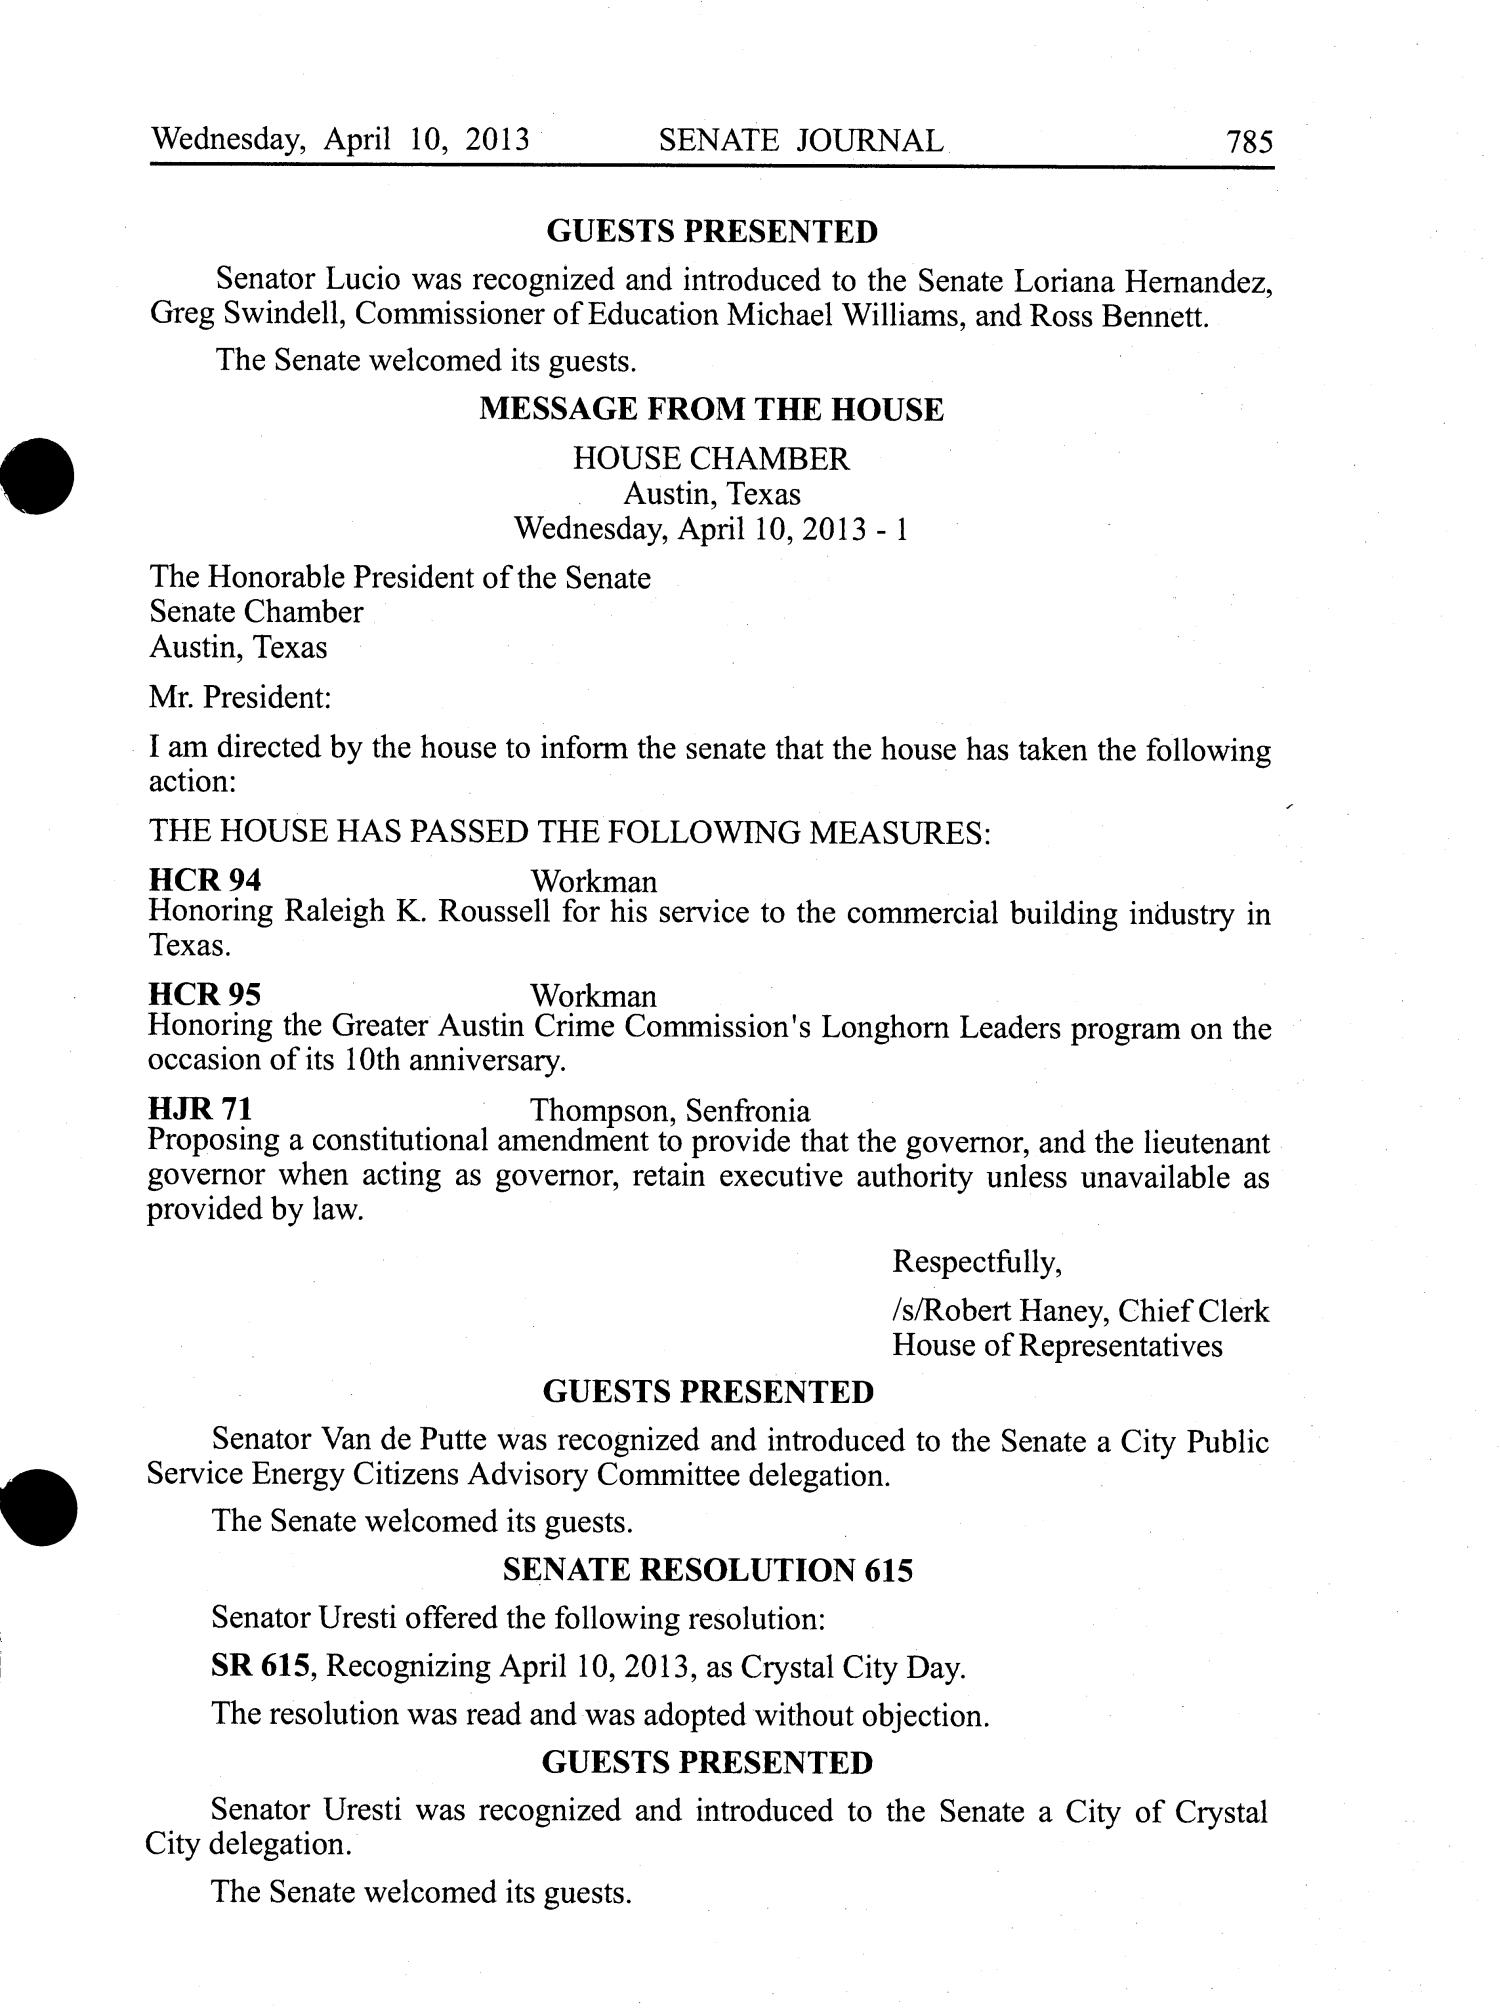 Journal of the Senate of Texas: 83rd Legislature, Regular Session, Wednesday, April 10, 2013
                                                
                                                    785
                                                